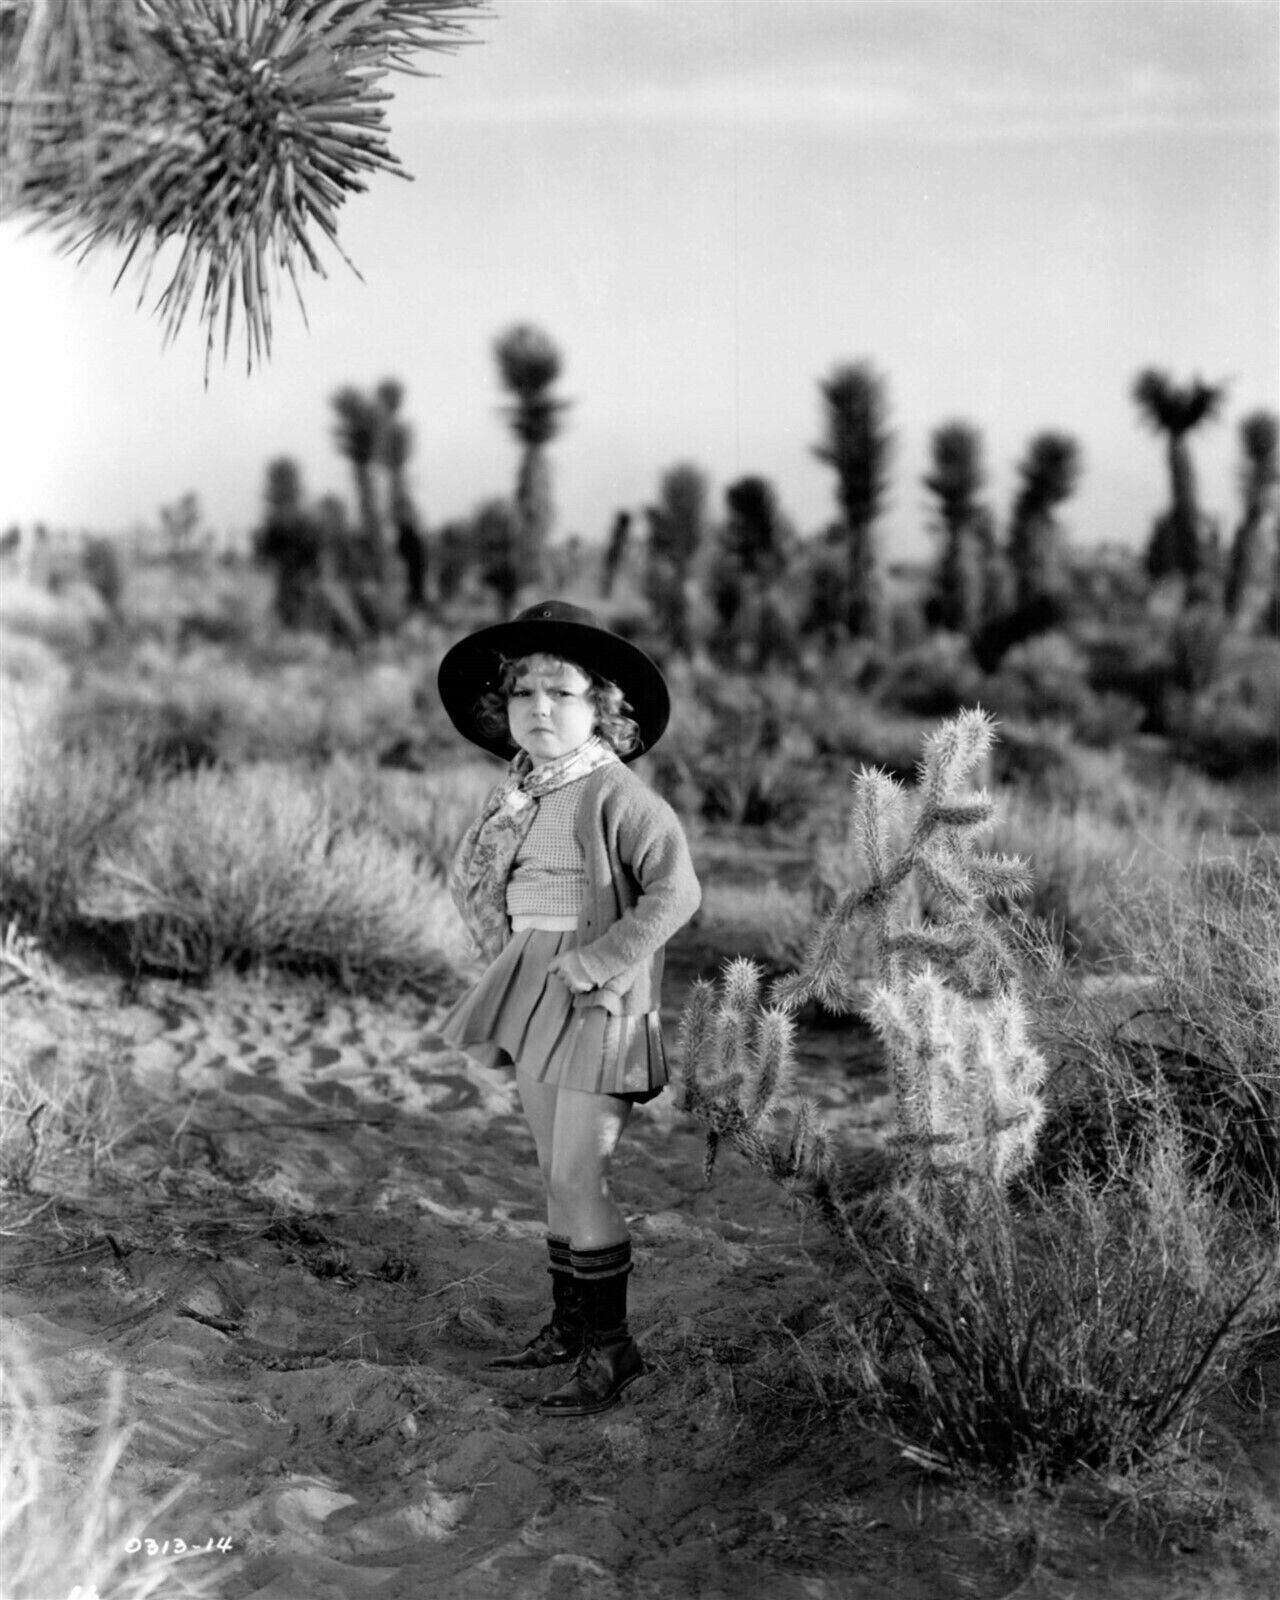 Shirley Temple looks cute in western hat in desert landscape 4x6 inch photo